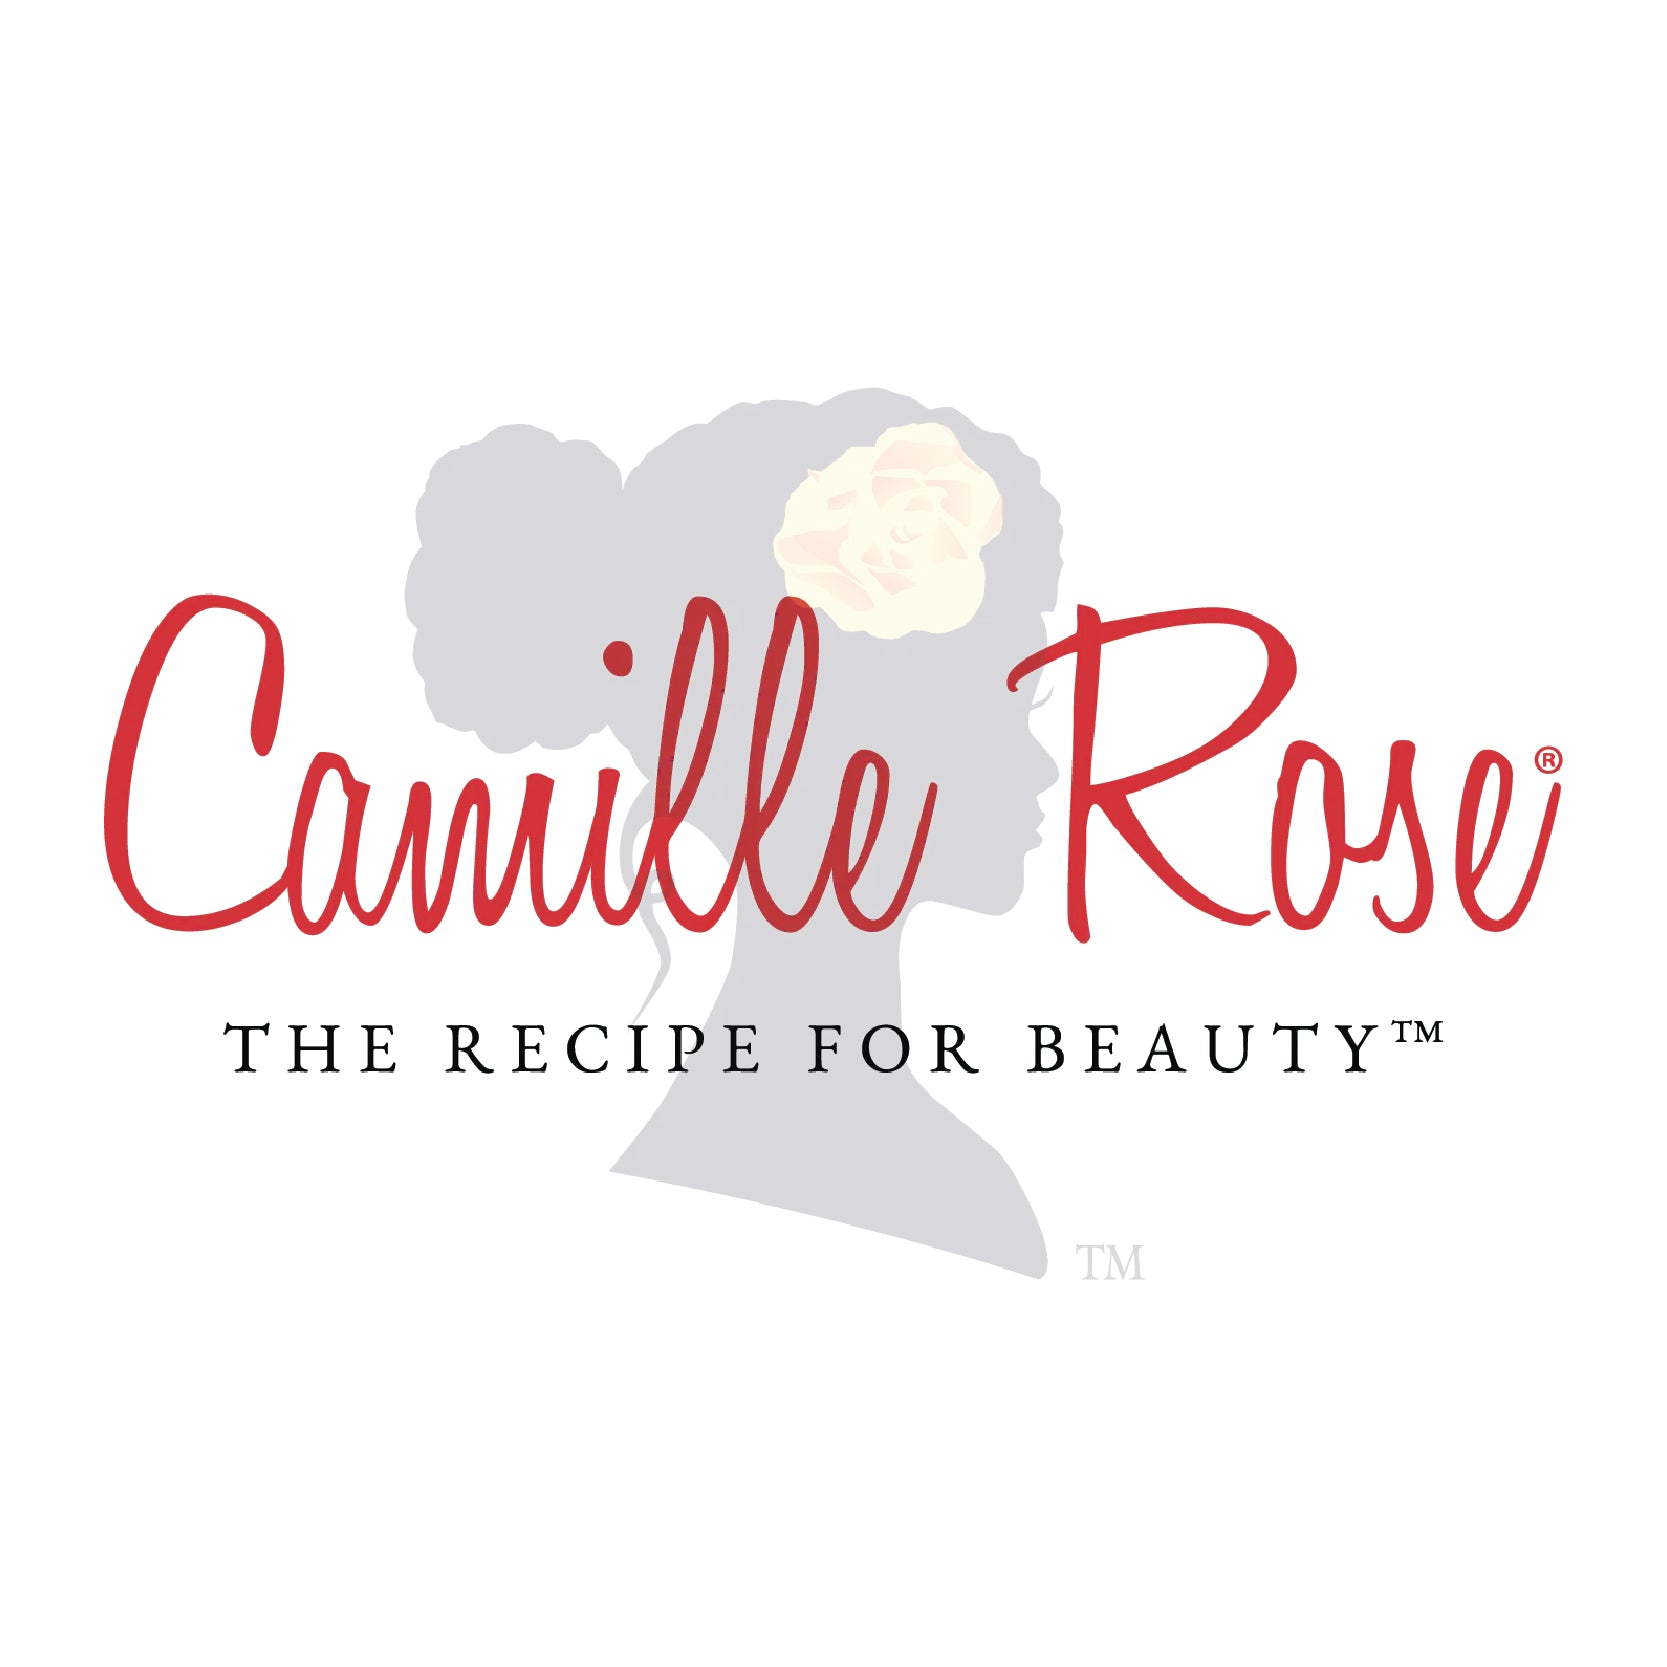 Camille Rose